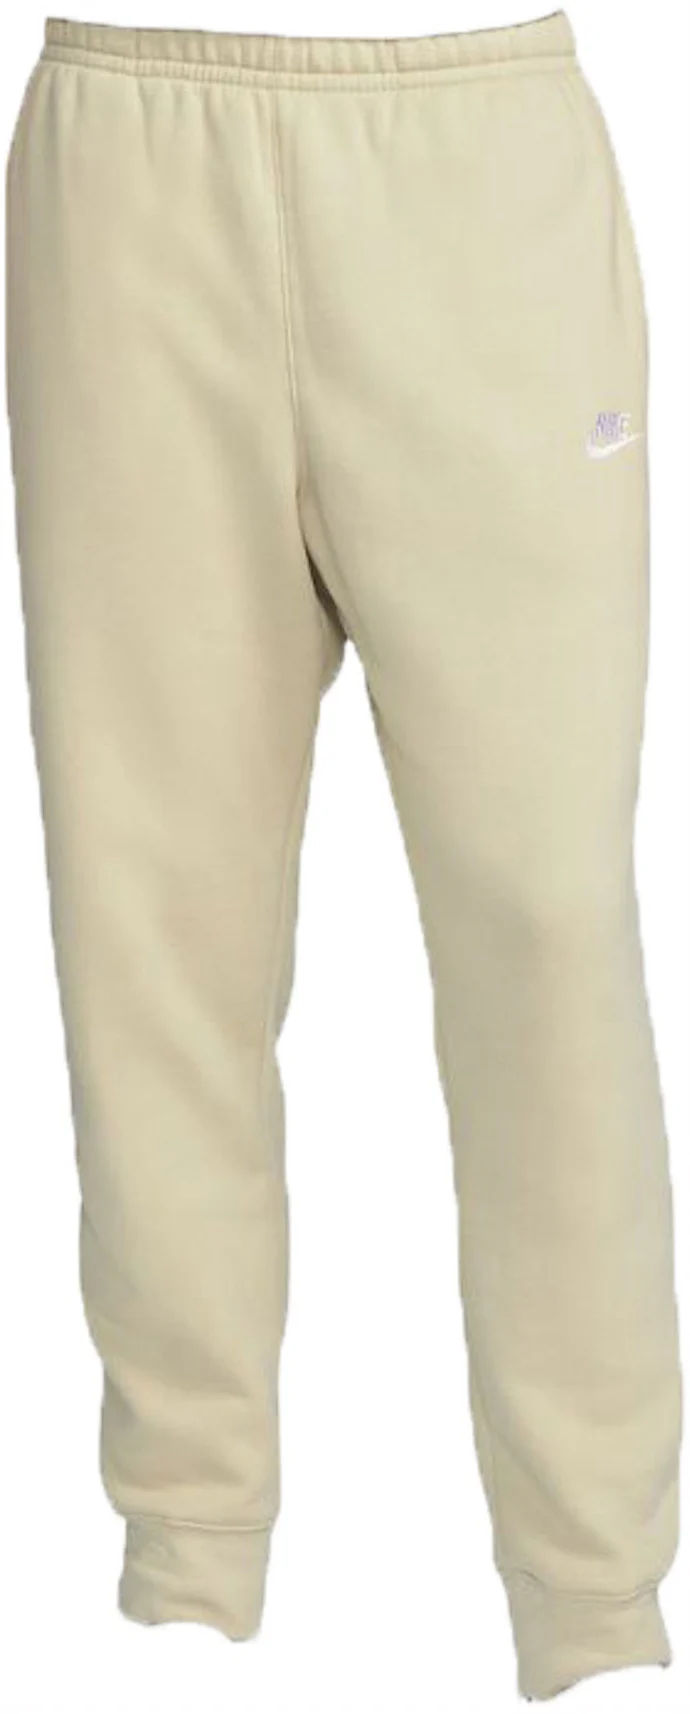 Compra NIKE Sportswear Club Fleece Cargo Pants dark grey heather